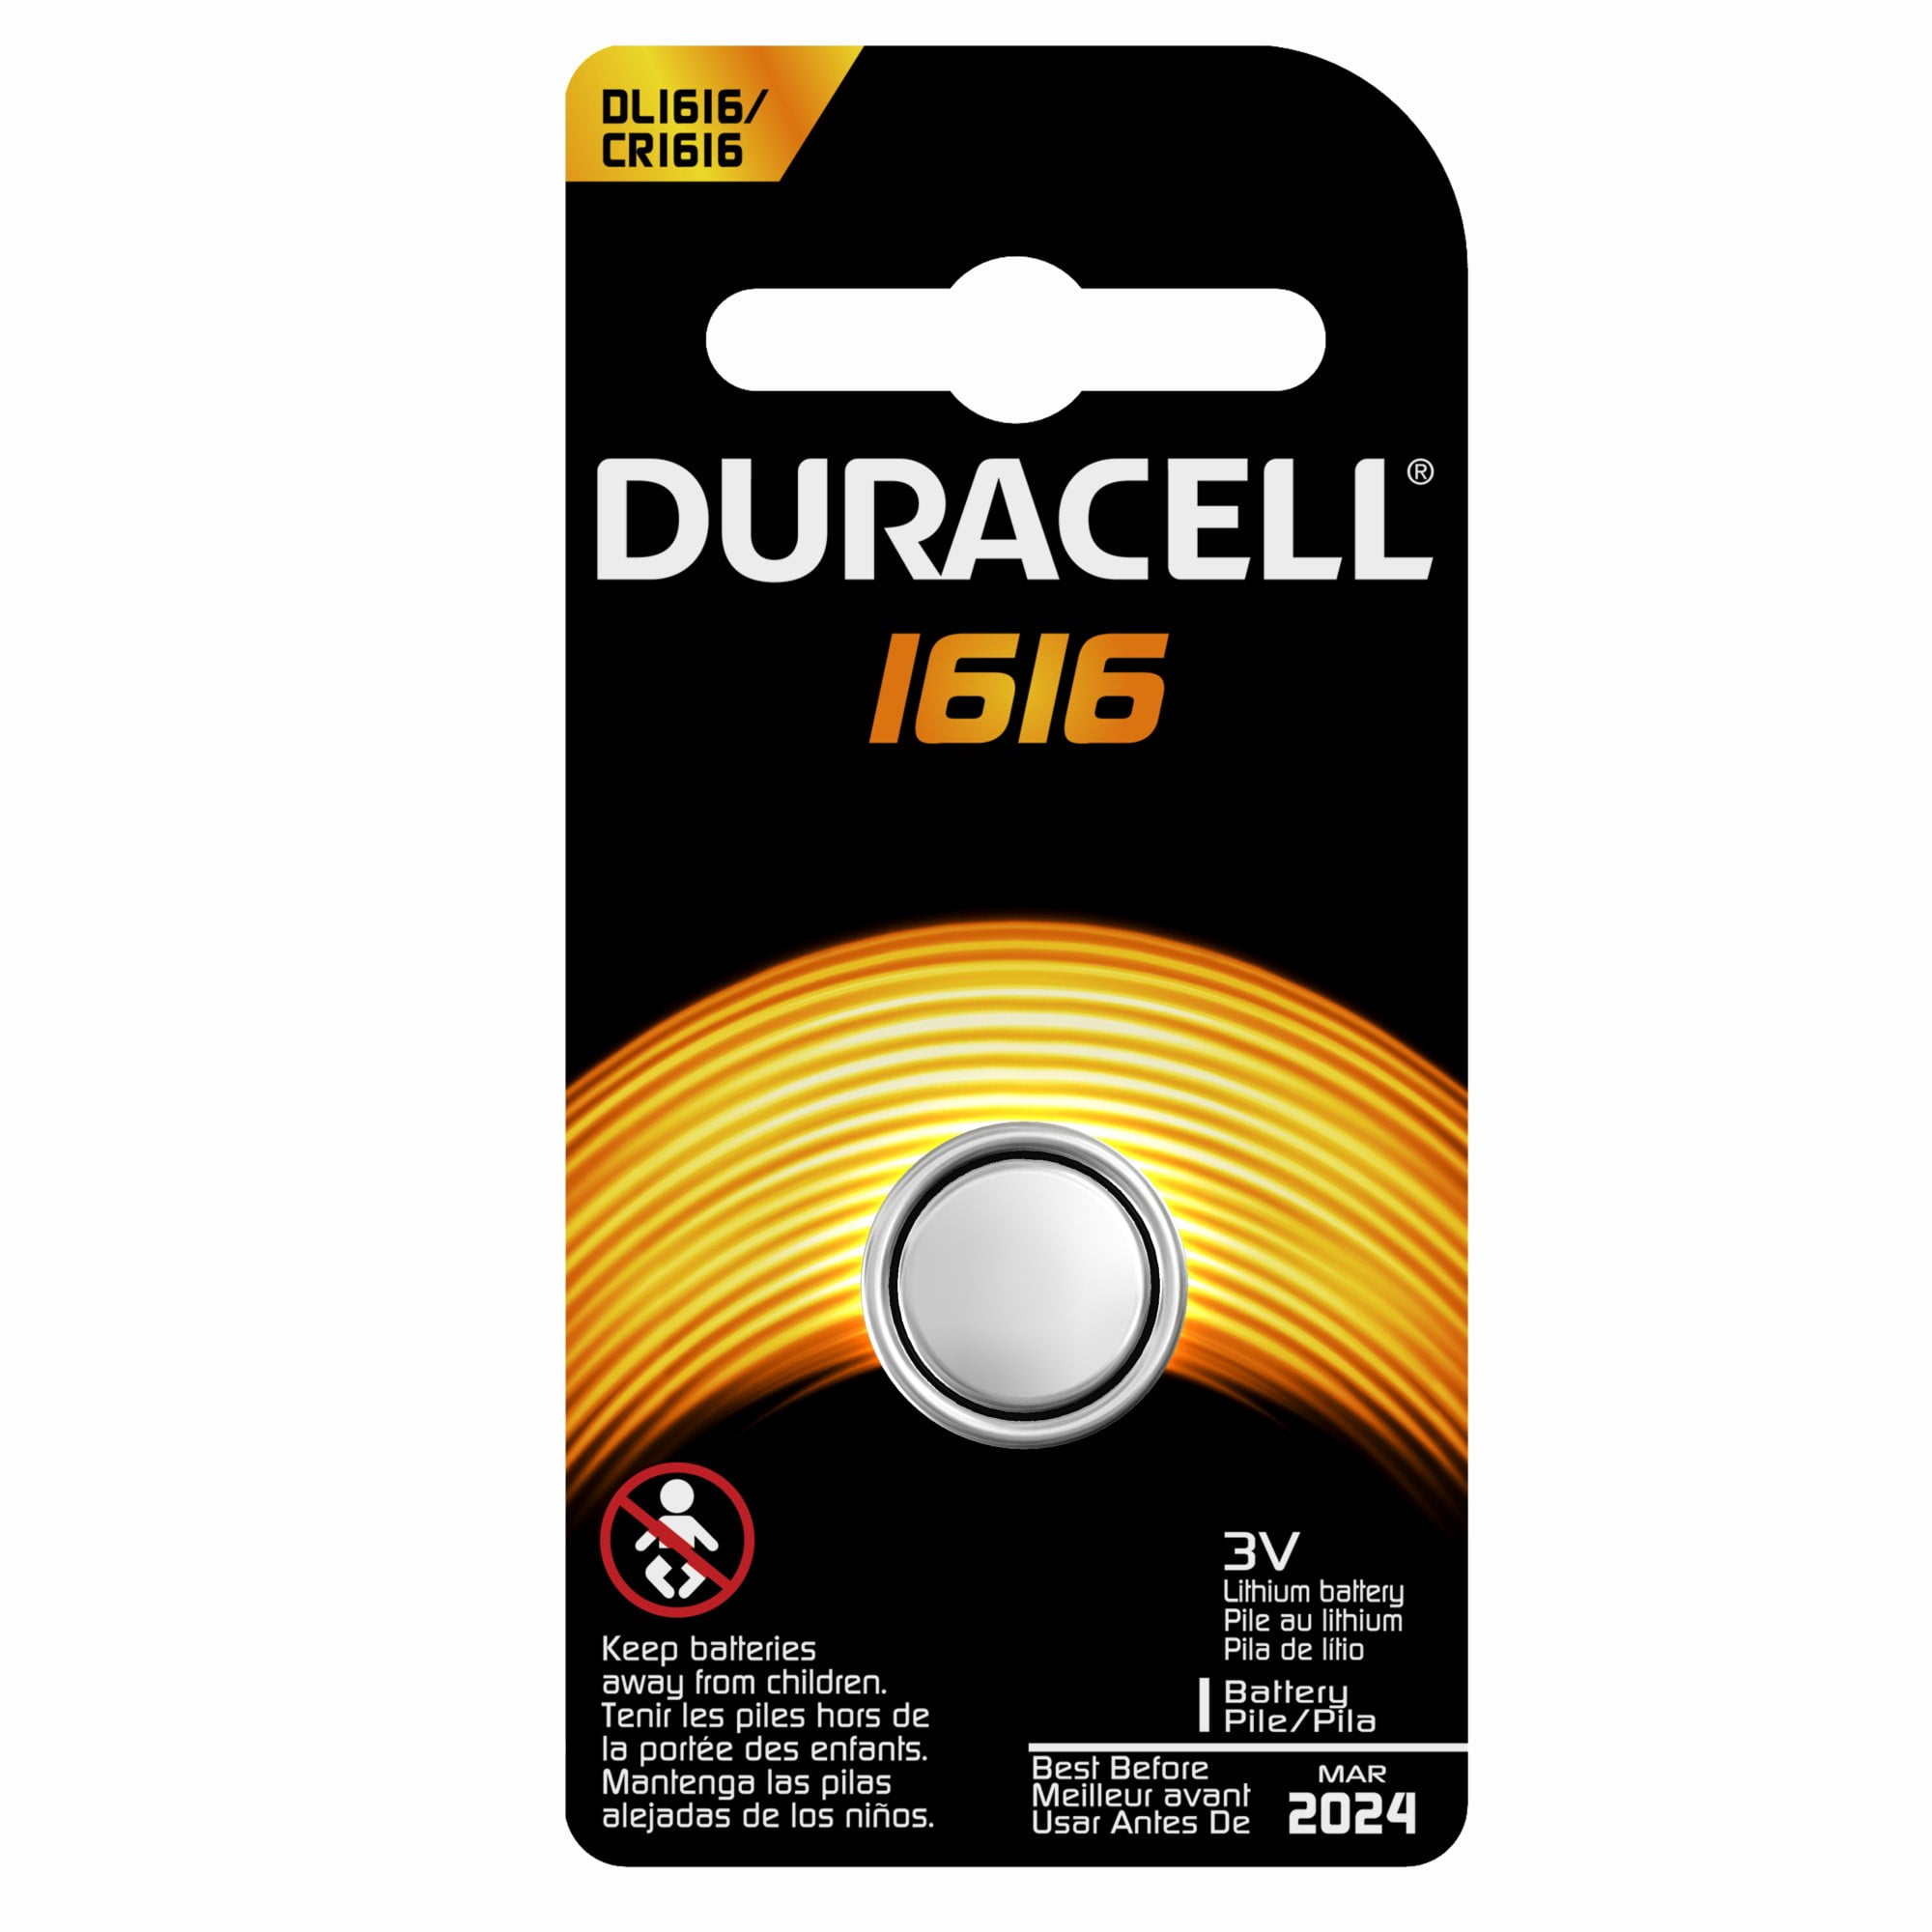 Duracell Duracell CR1616 Lithium Batterie 